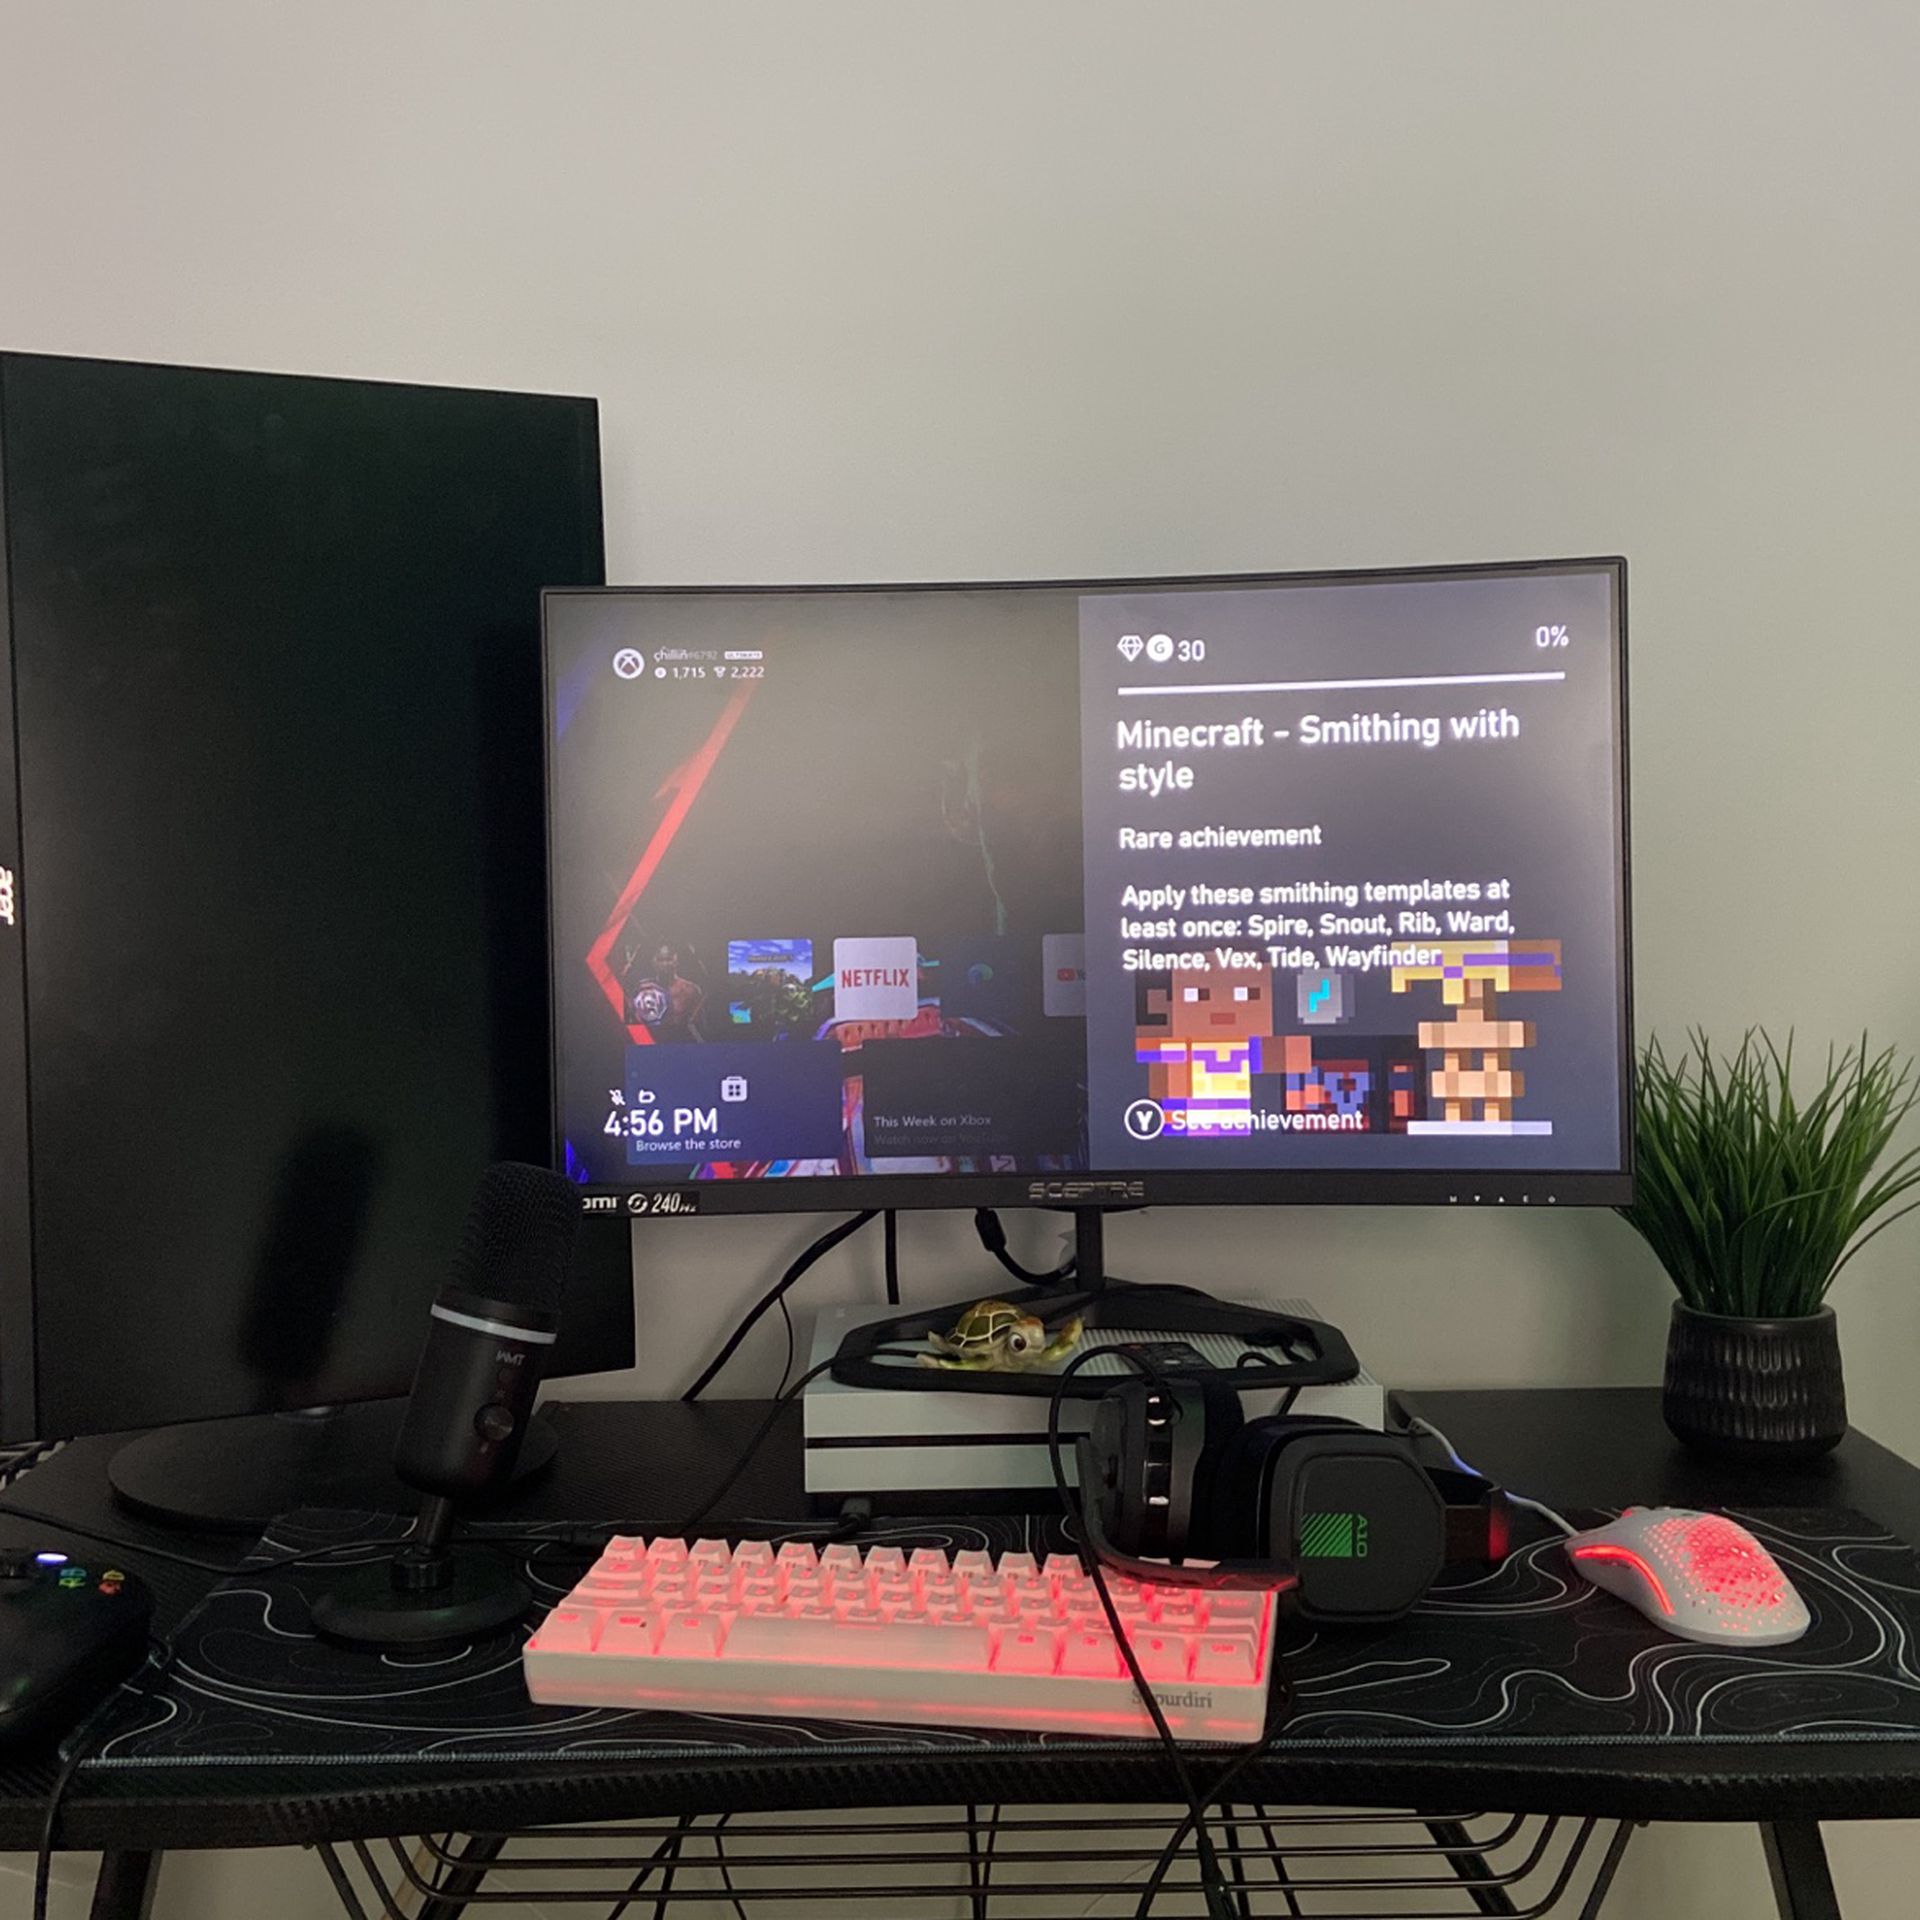 Full gaming setup